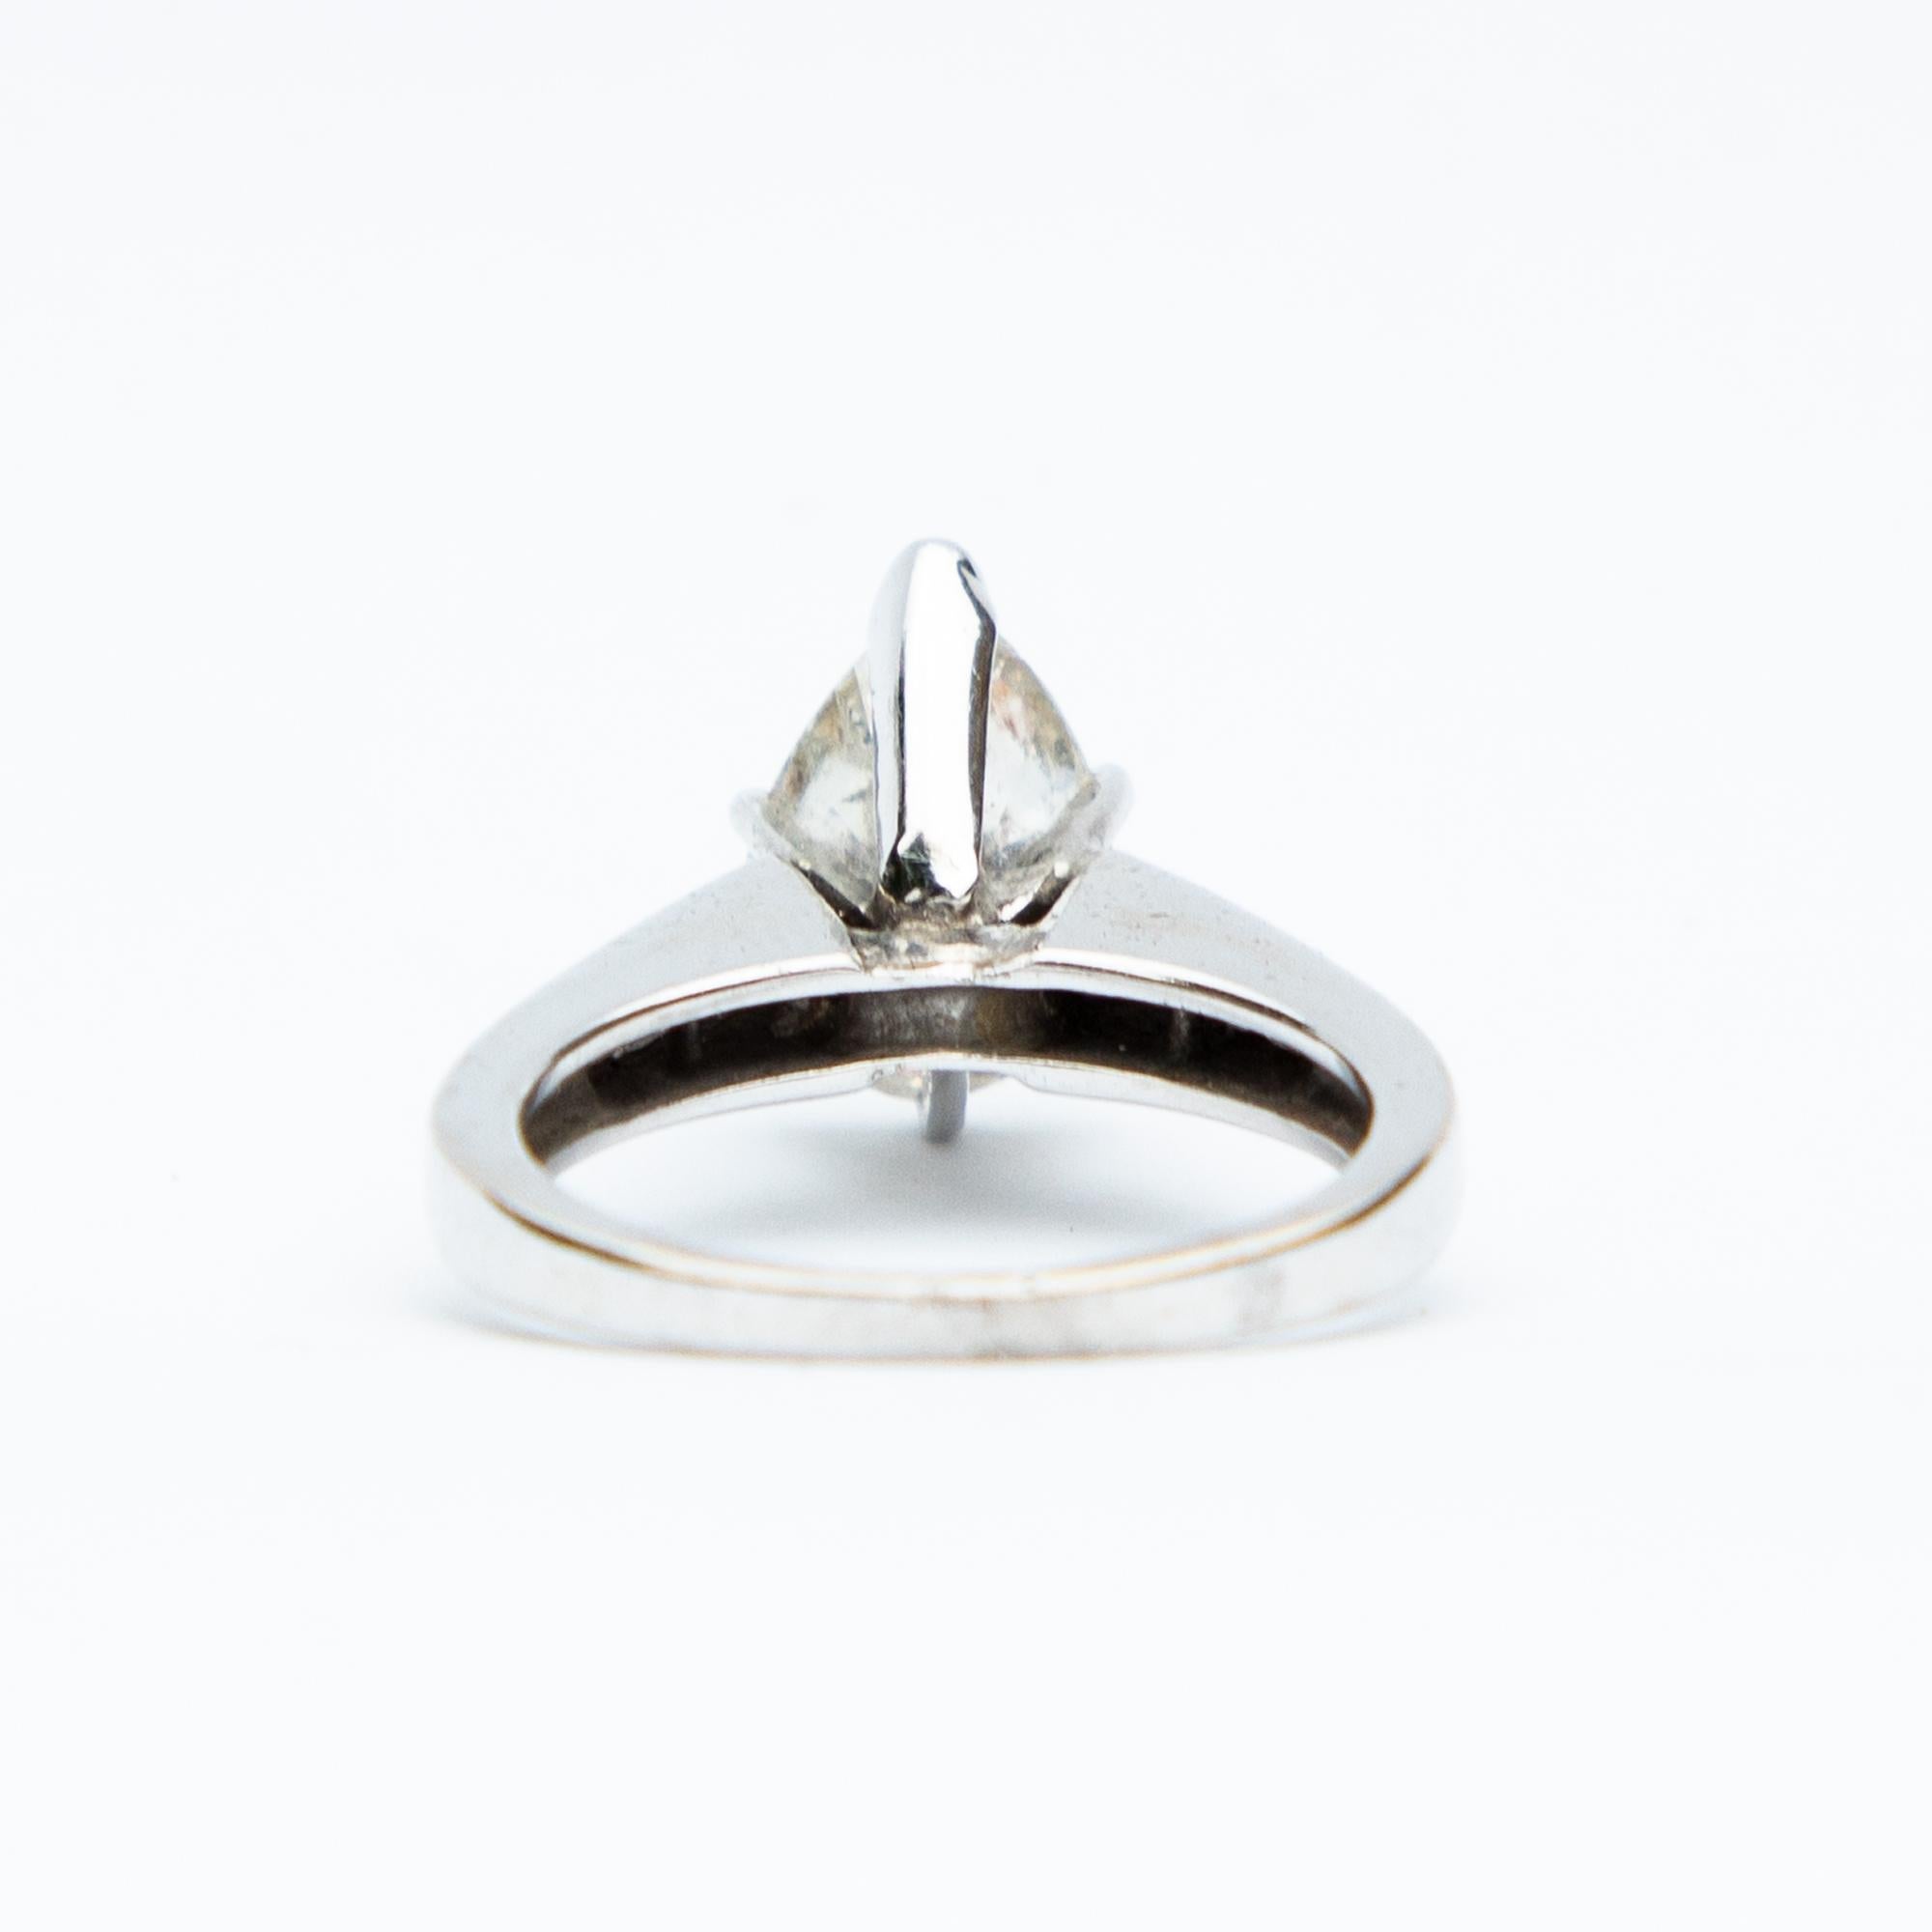 Women's Art Deco Inspired Pear Cut White Gold Diamond Ring